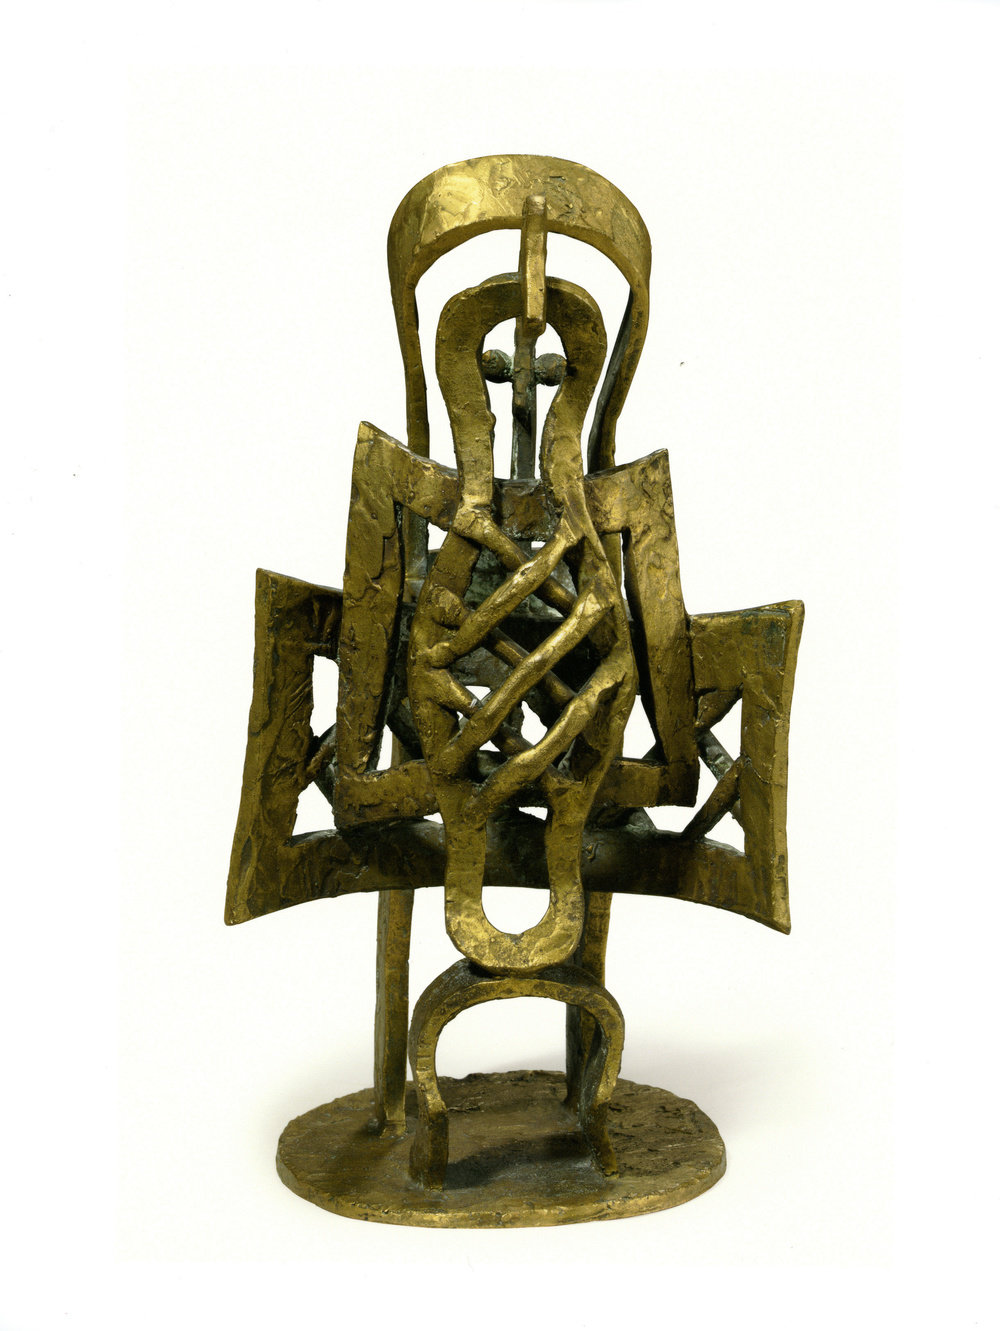 Lipchitz, mardi gras, 1926, bronze with gold patina, height 11 in